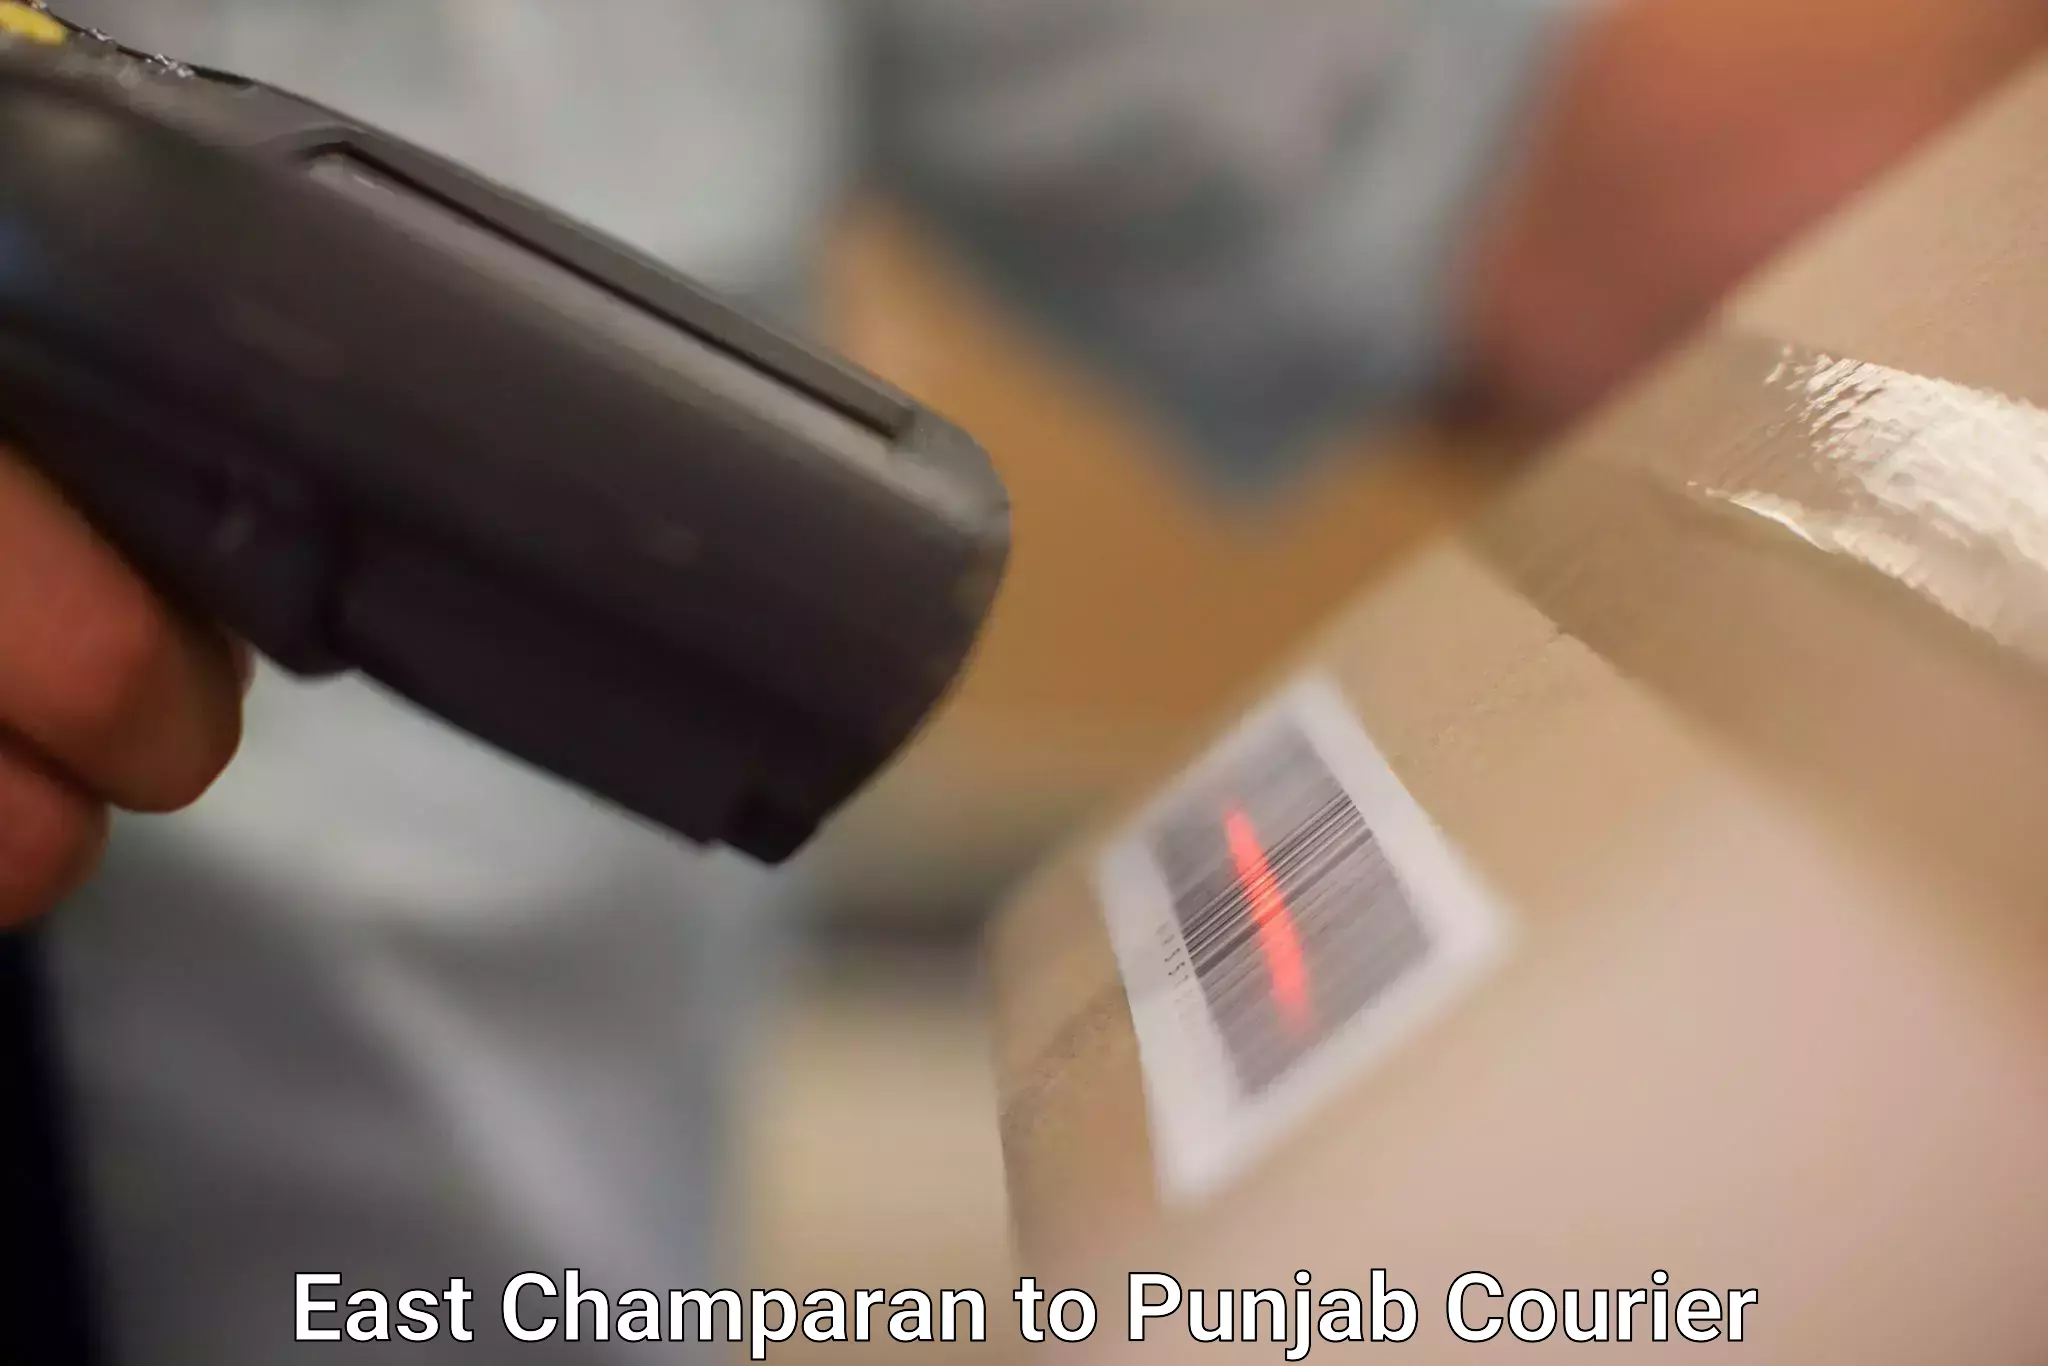 Quick dispatch service East Champaran to Punjab